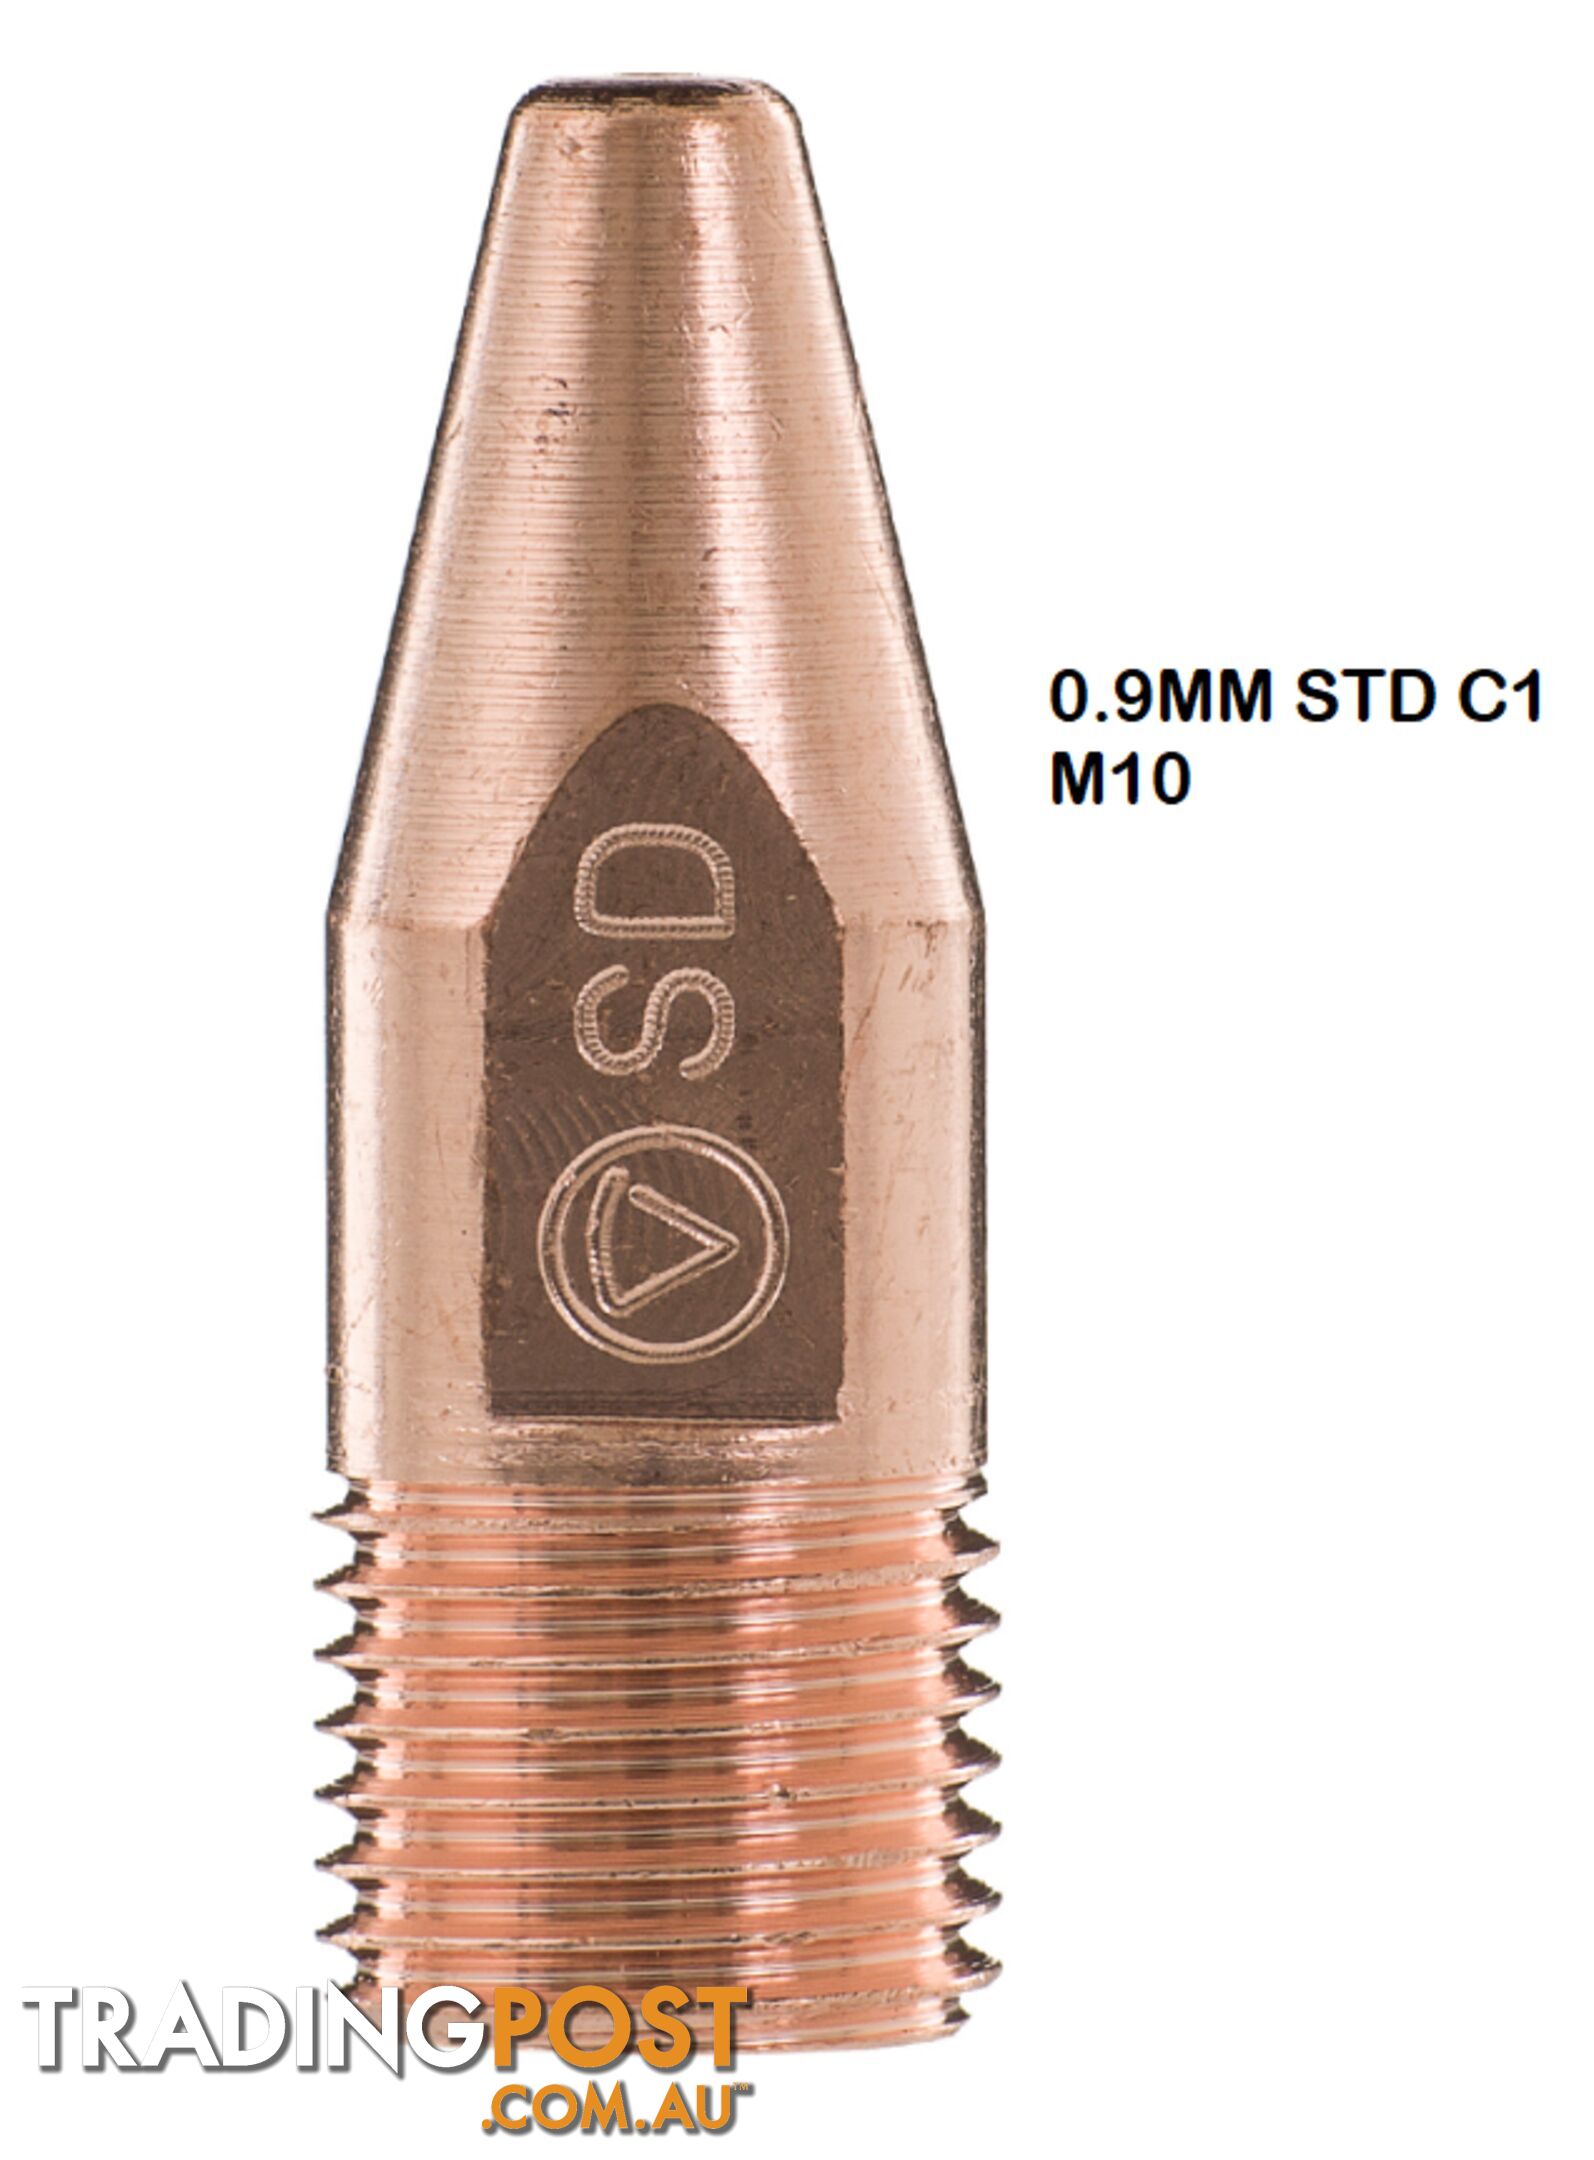 Contact Tip 0.9mm M10 Thread C1 Standard Kemppi CT09C1SD001 Pkt : 10